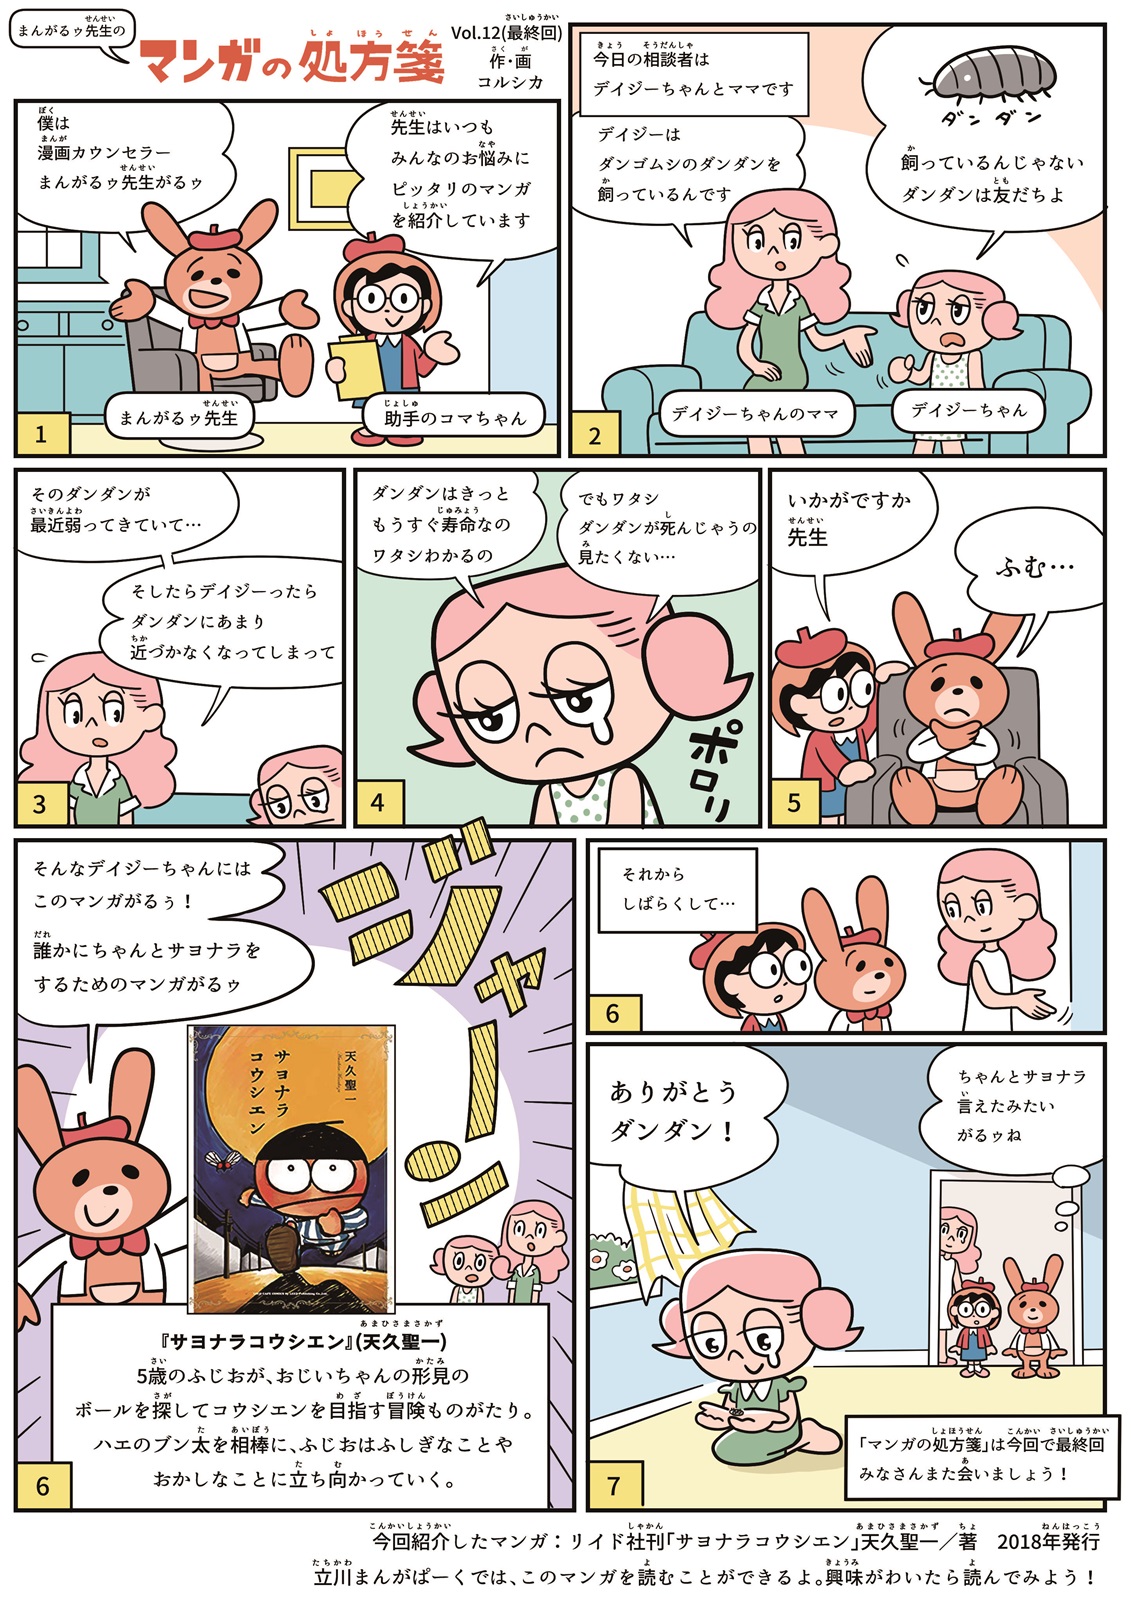 https://mangapark.jp/topics/2019/06/30/images/mangaroosensei_vol12.jpg